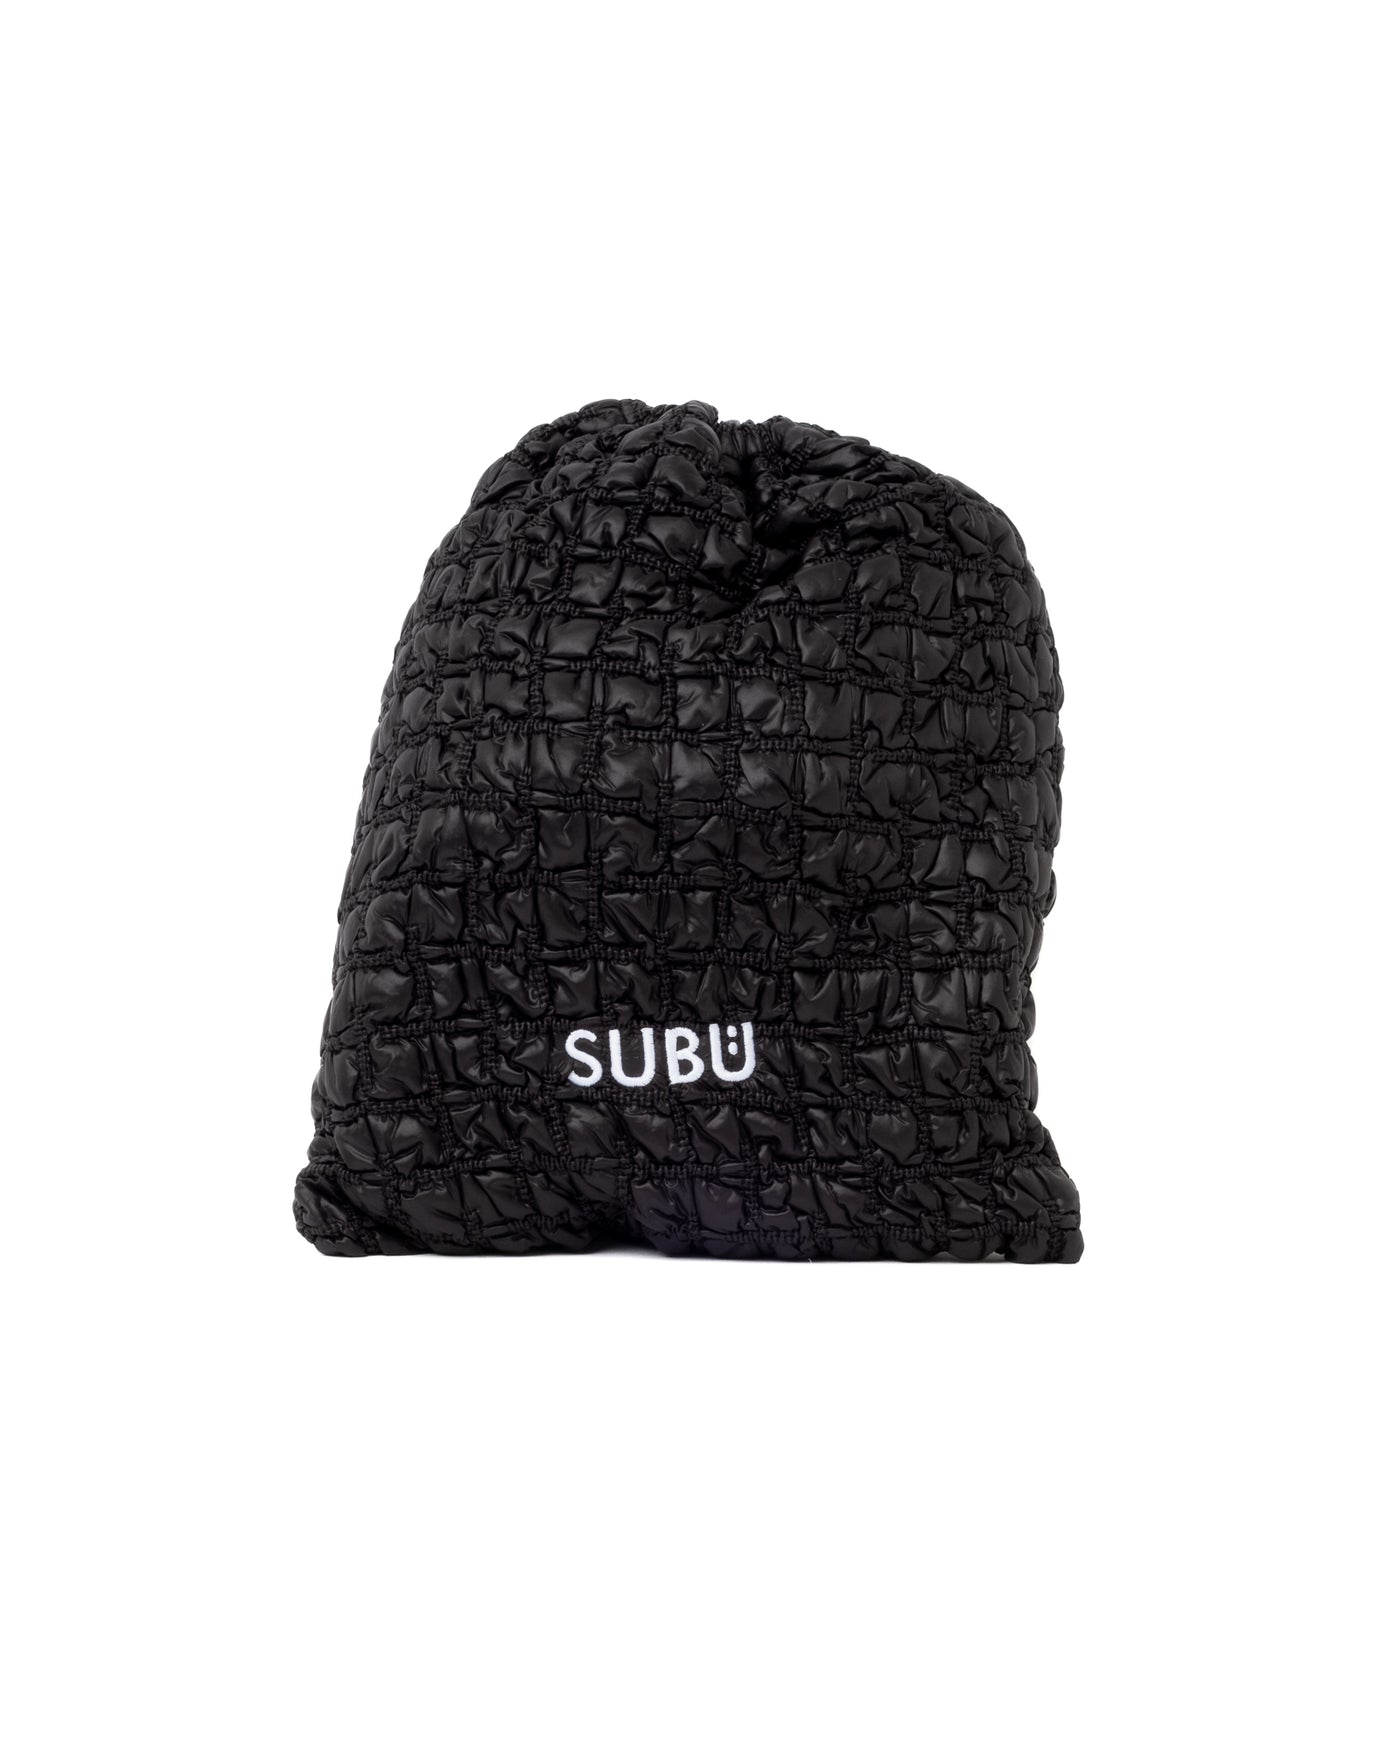 Subu Concept Bumpy Black